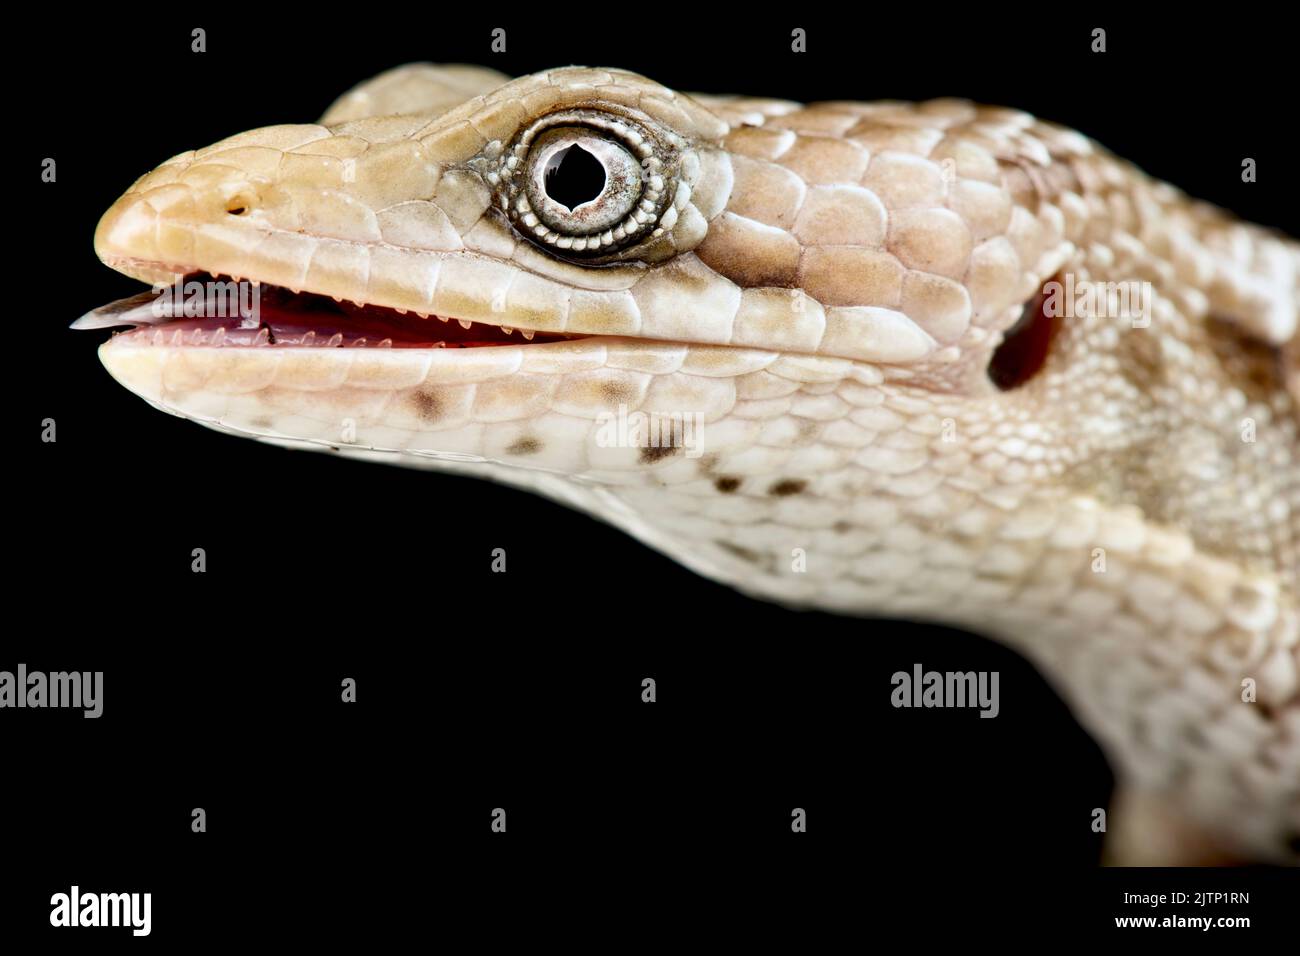 Texas alligator lizard (Gerrhonotus infernalis) Stock Photo